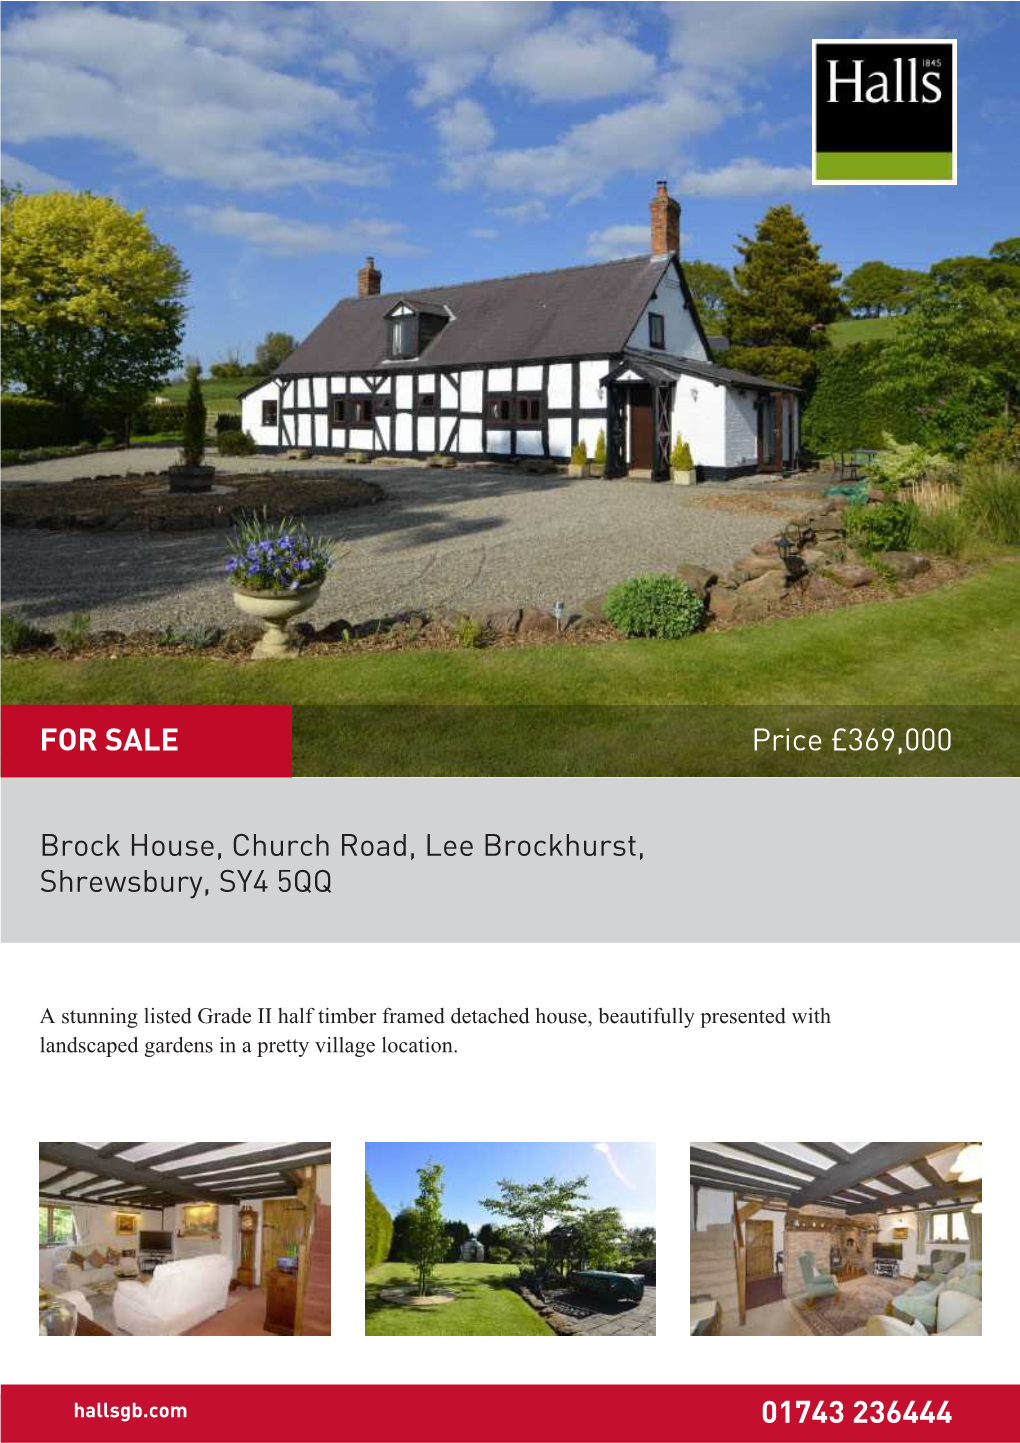 Brock House, Church Road, Lee Brockhurst, Shrewsbury, SY4 5QQ